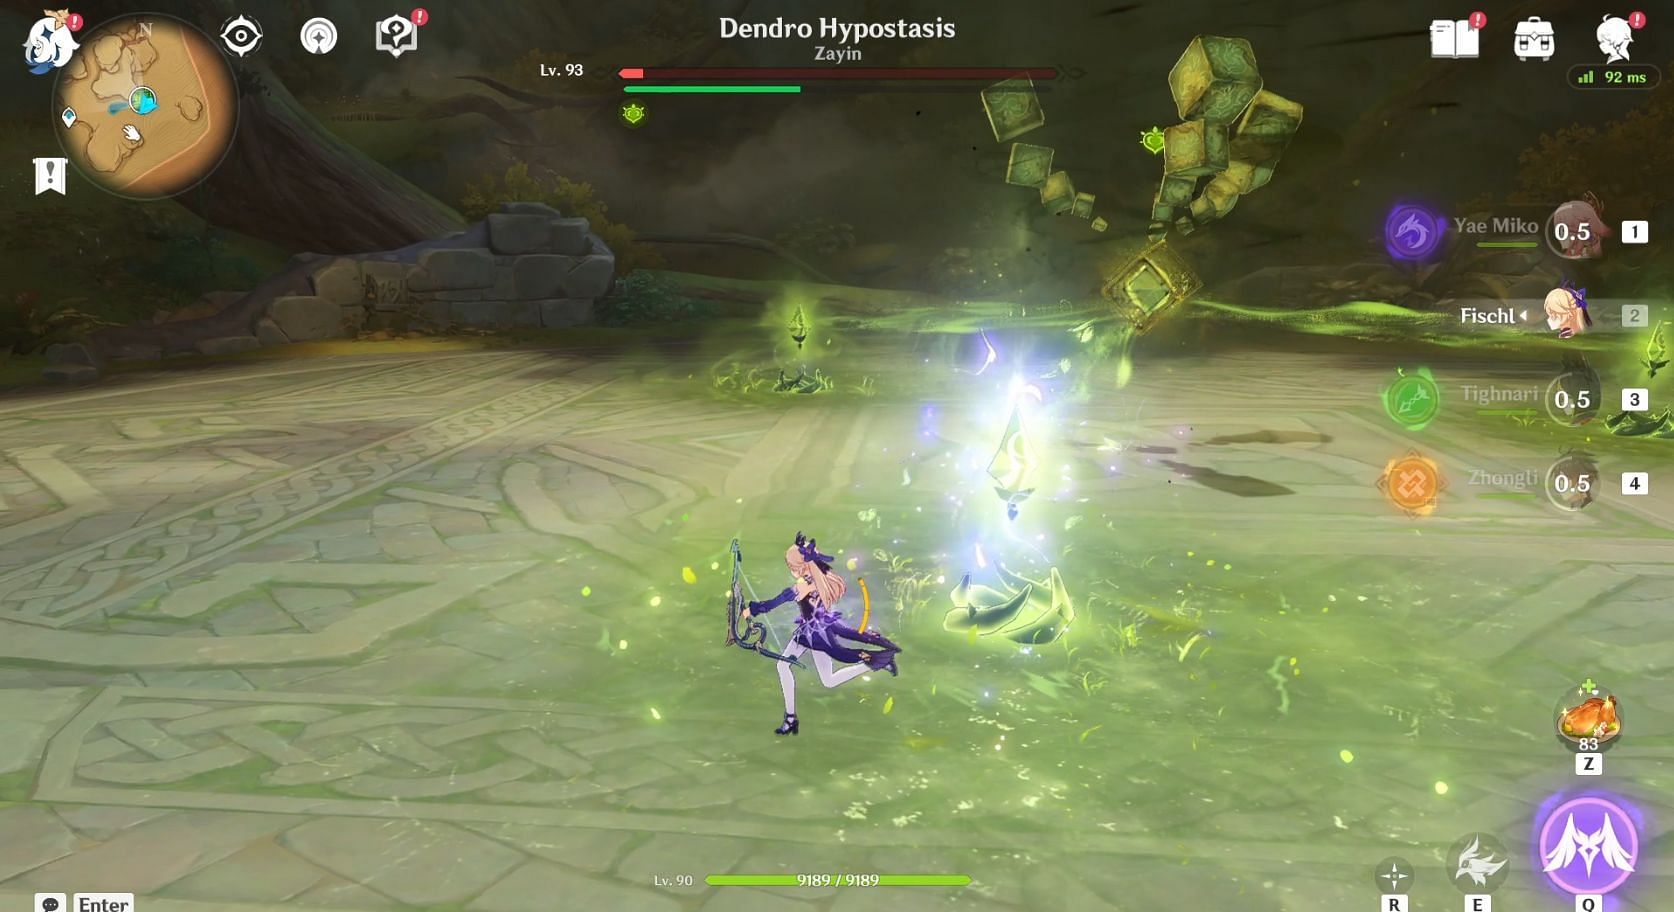 Use Dendro and Electro to defeat Zayin (Image via HoYoverse)